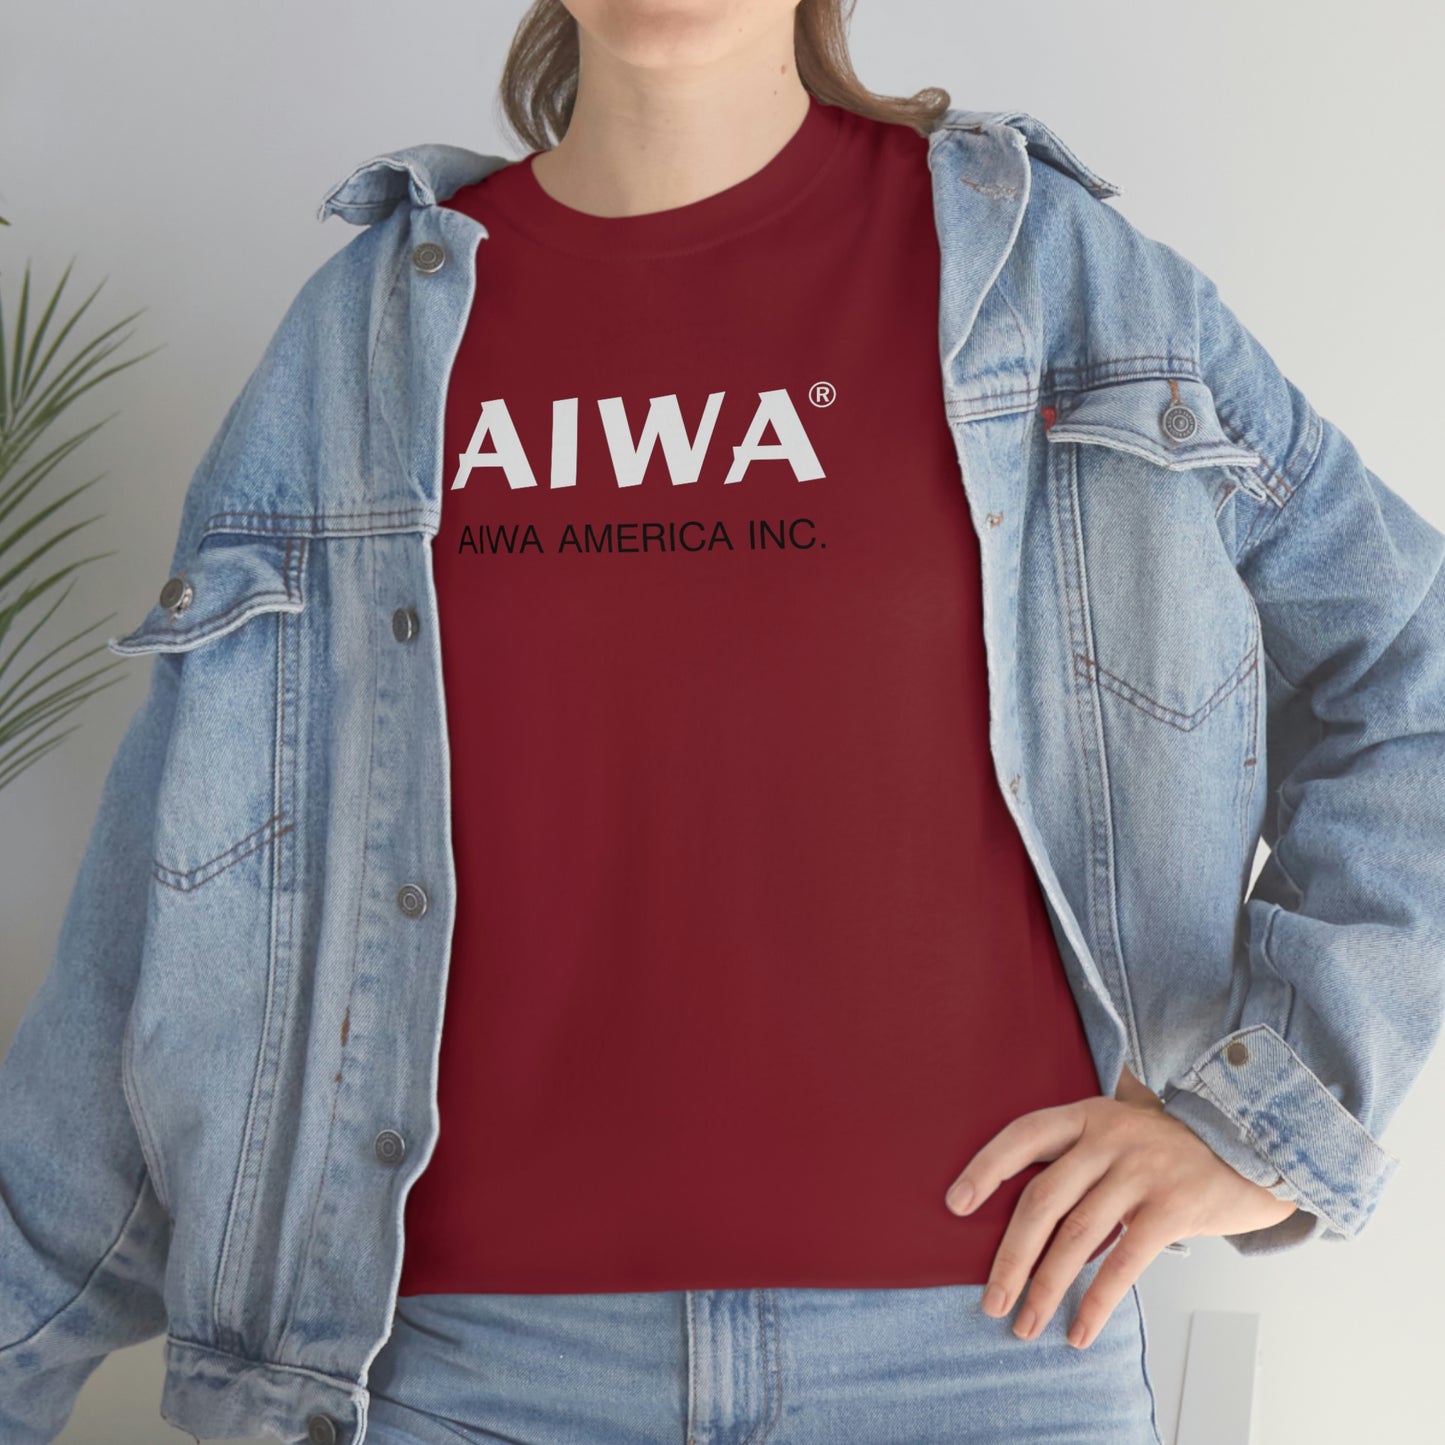 Aiwa T-Shirt